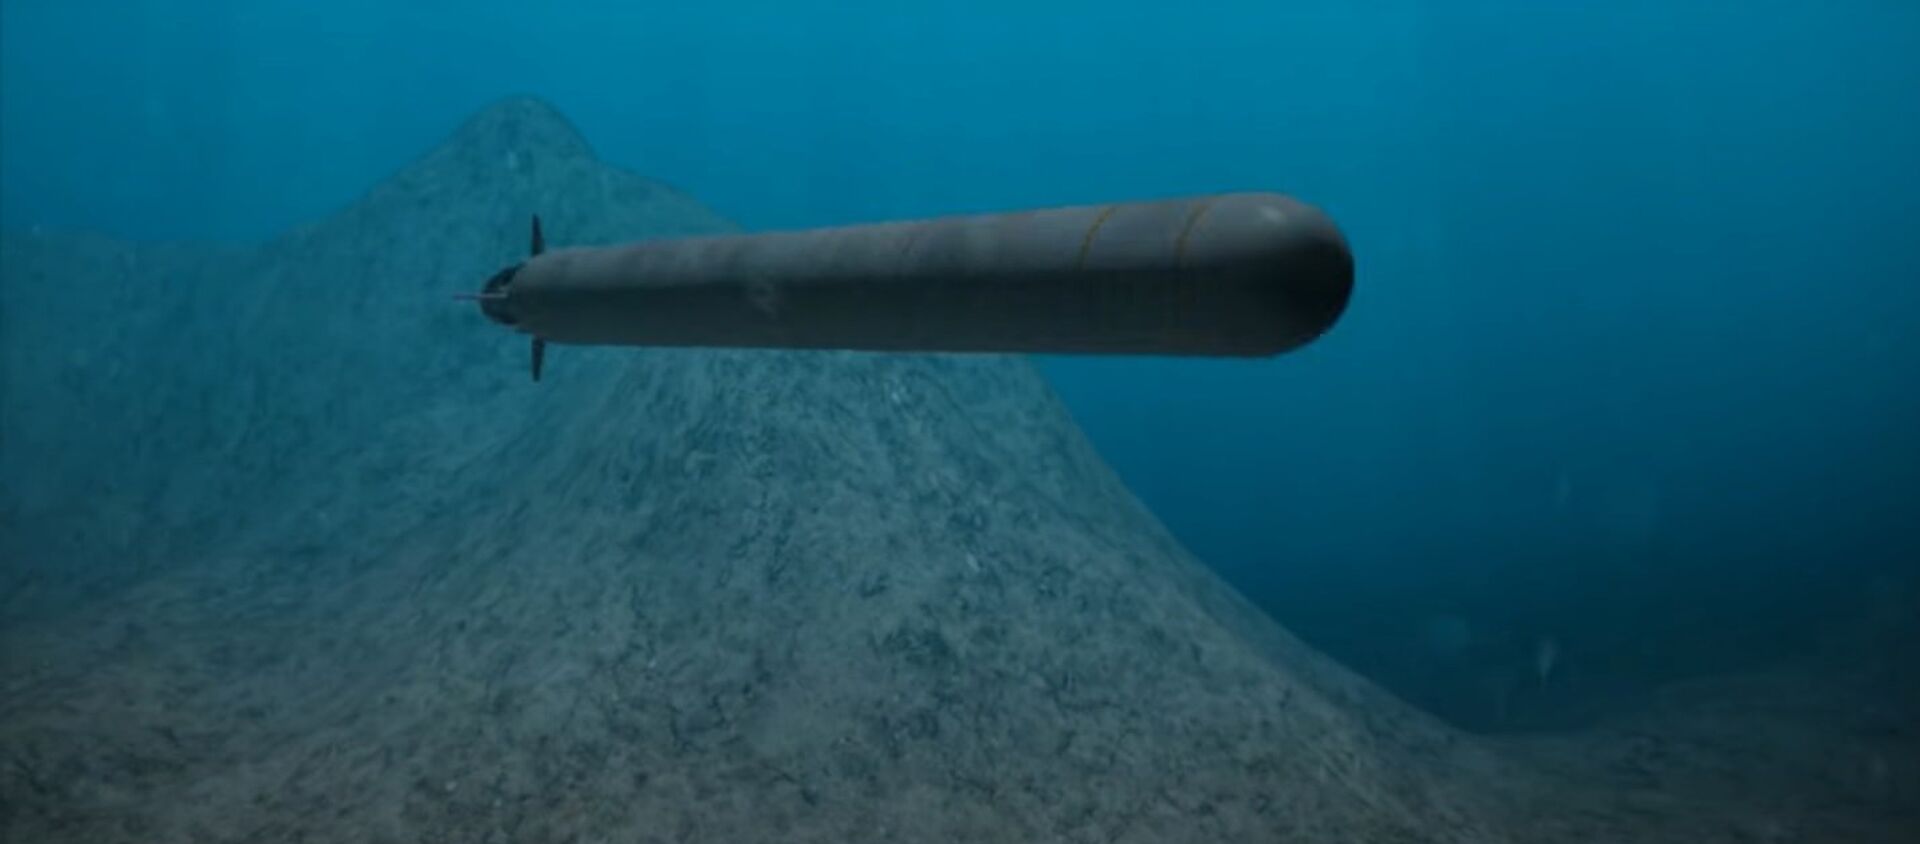 Oceanic multipurpose system equipped with unmanned underwater vehicles - Sputnik Türkiye, 1920, 13.02.2019